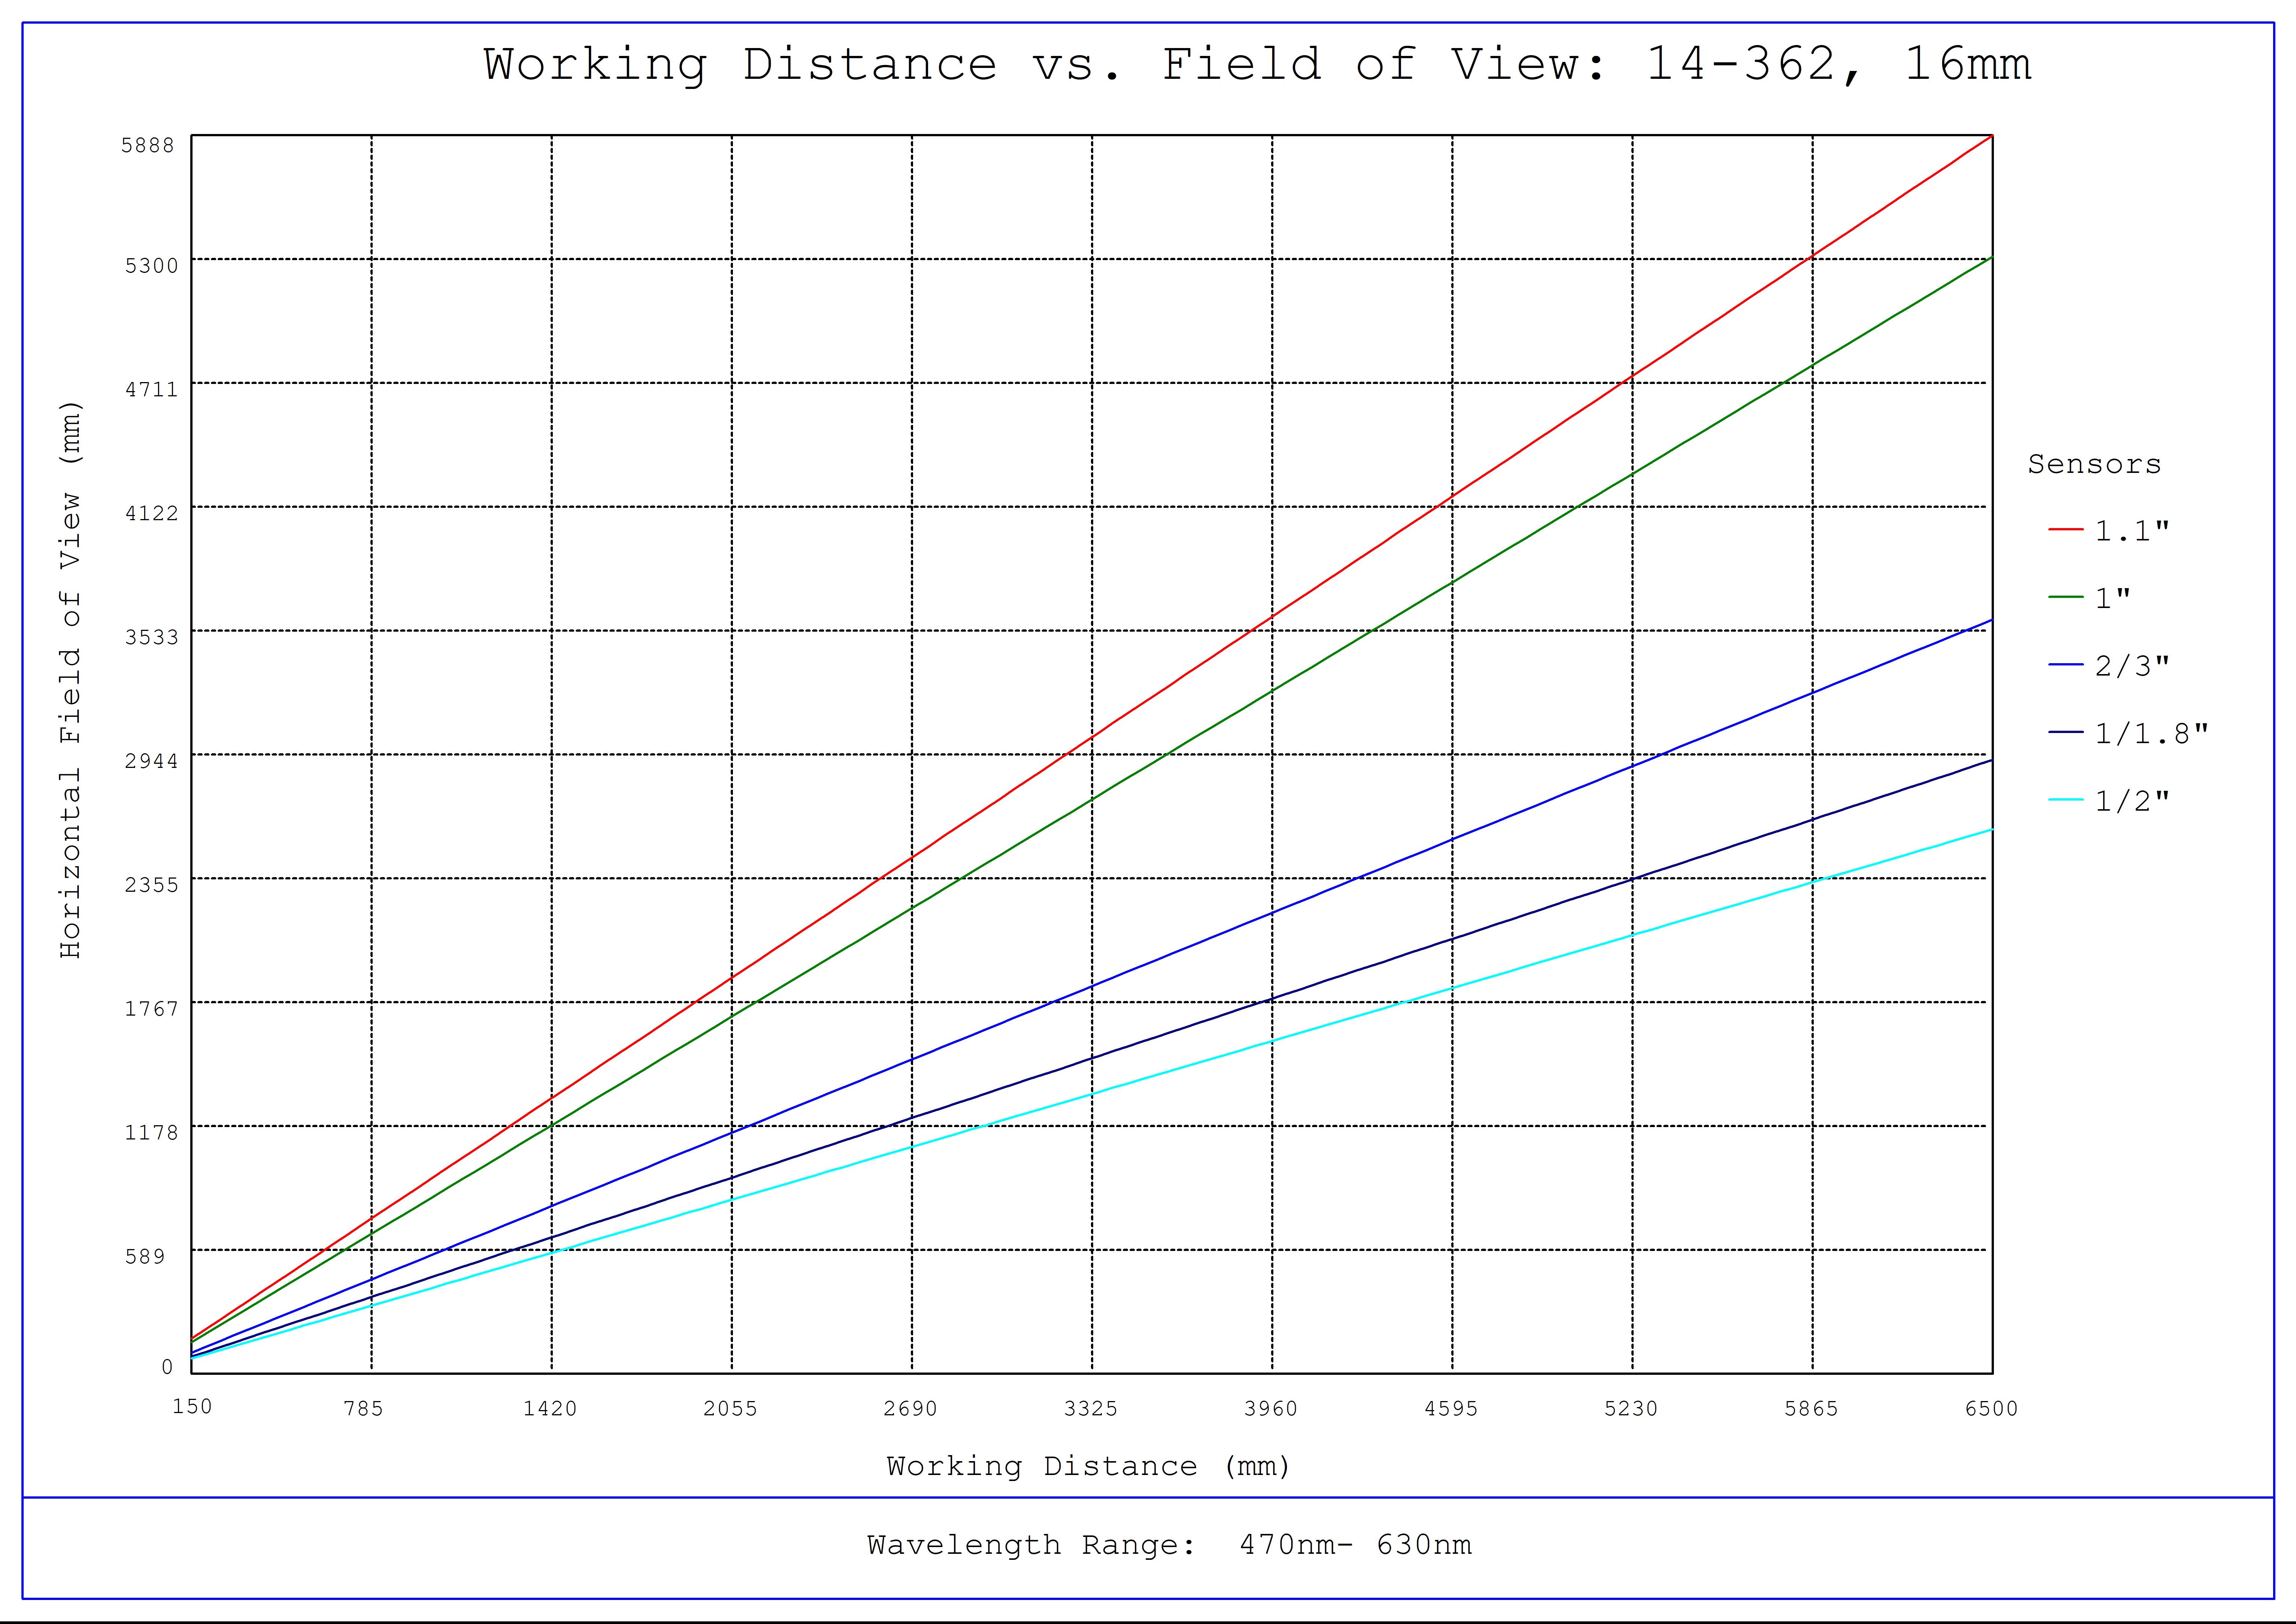 #14-362, 16mm LT Series Fixed Focal Length Lens, Working Distance versus Field of View Plot